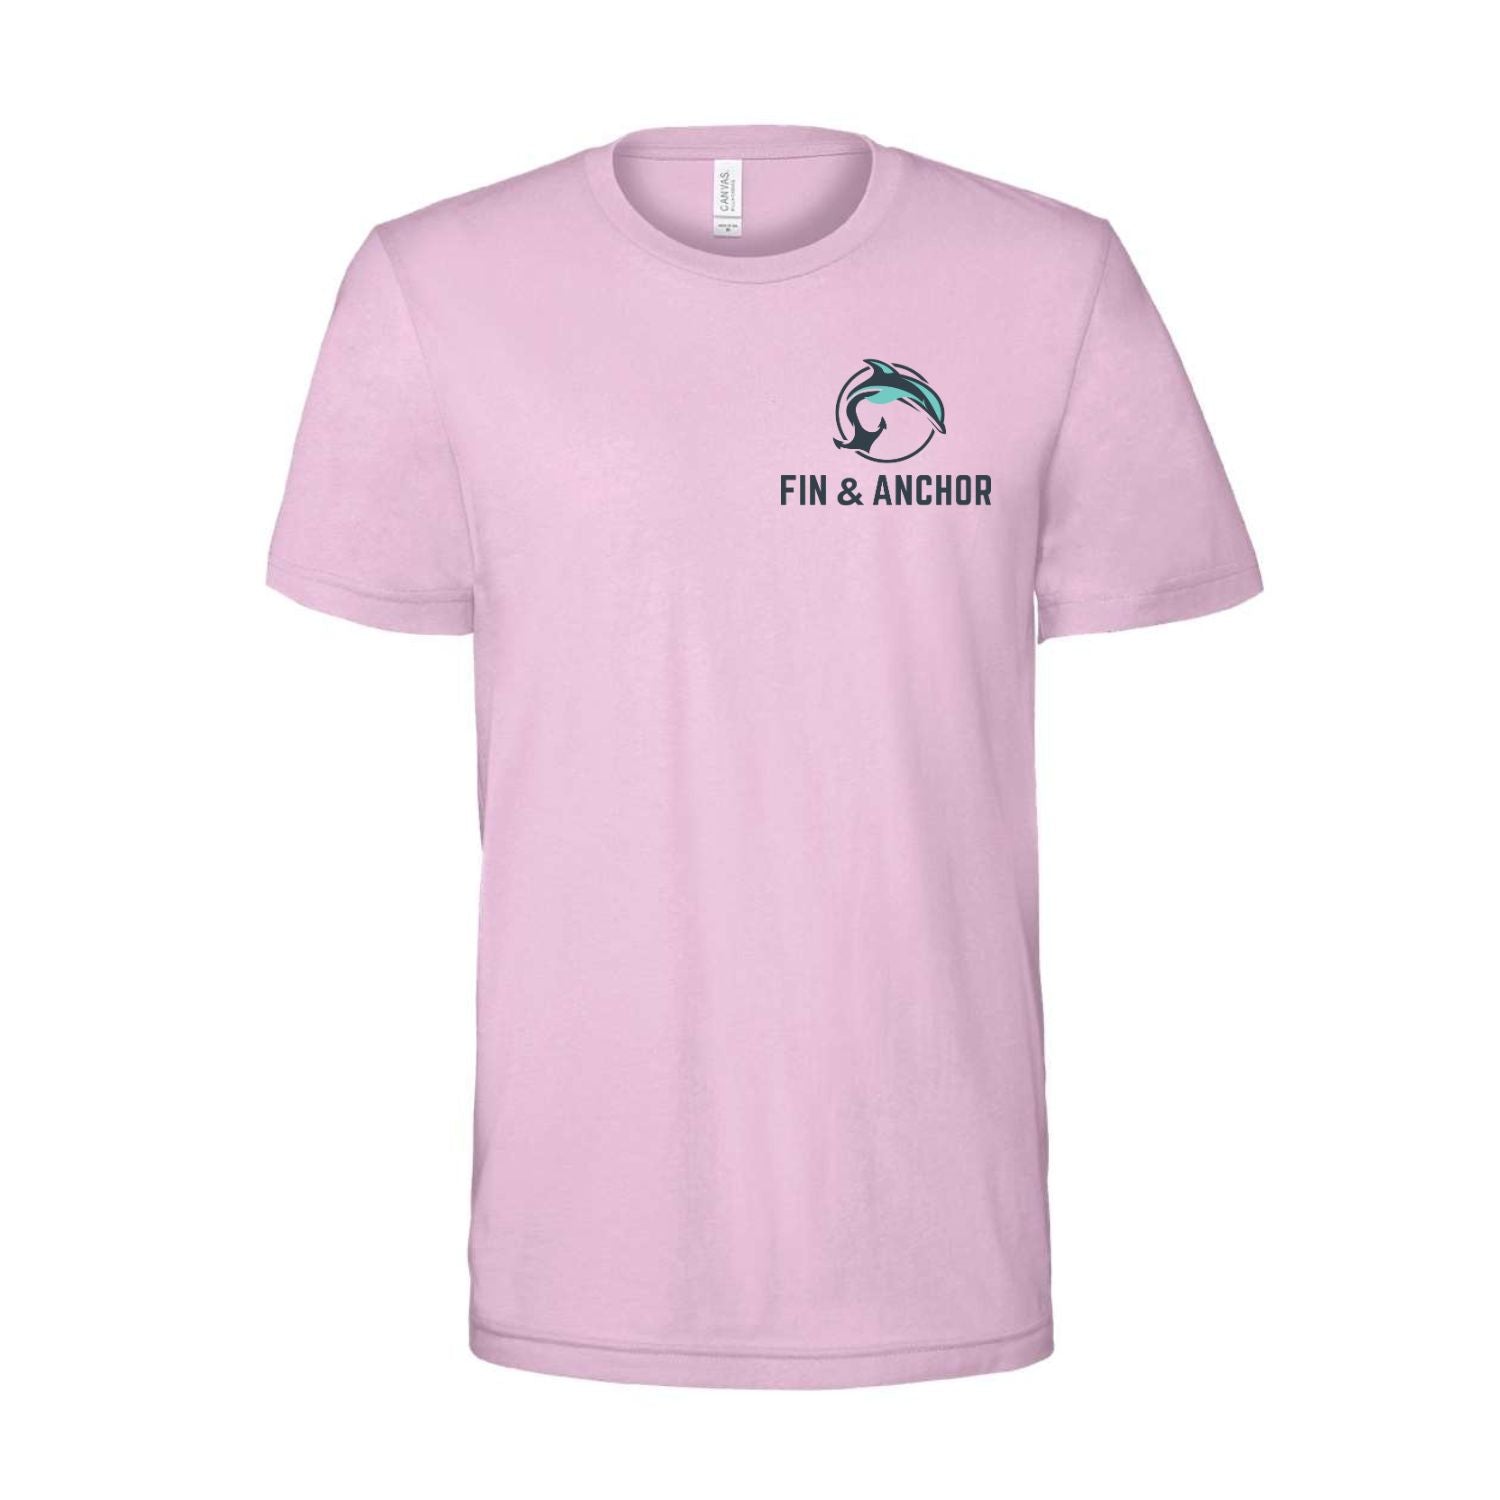 Fin & Anchor Seas the Day Unisex Jersey Short Sleeve T-Shirt